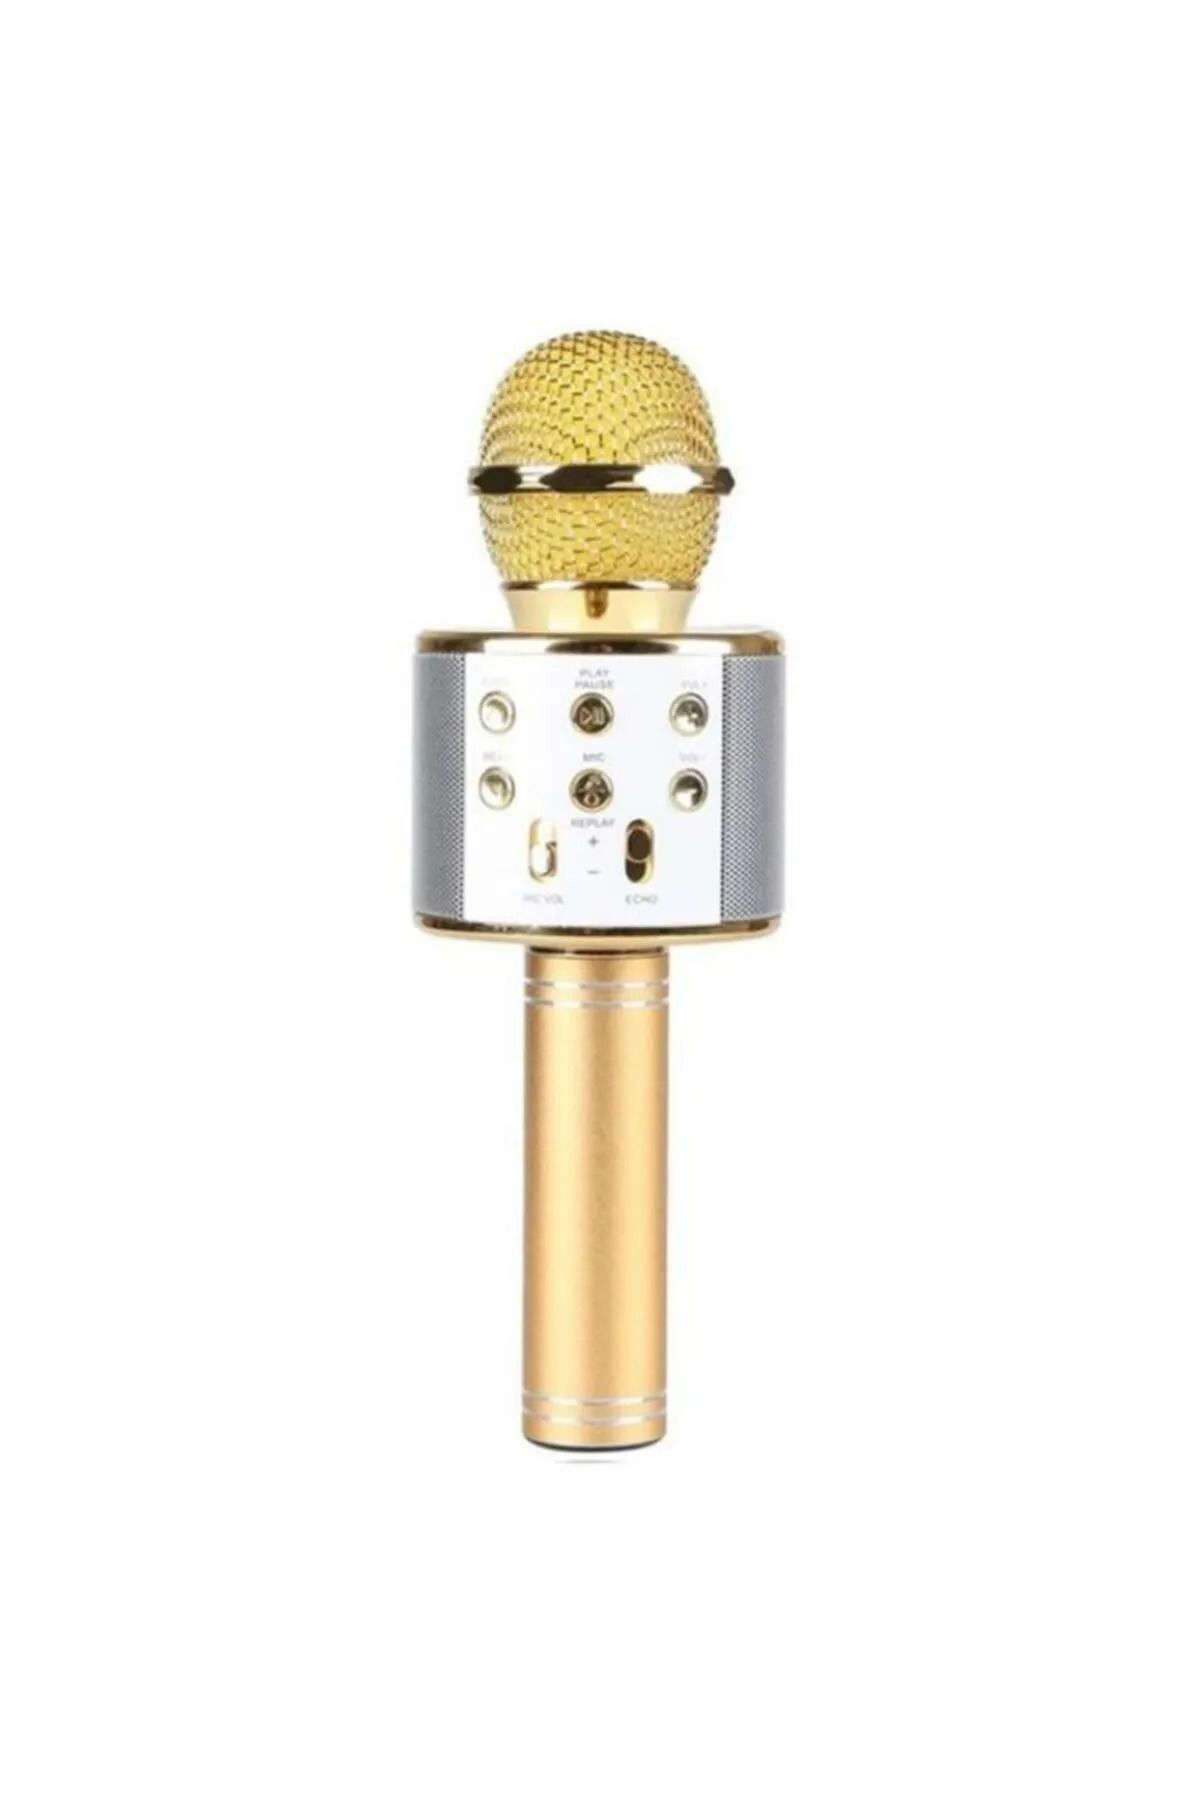 Dietro Ws-858 Karaoke Mikrofon Bluetooth Hoparlör Hafıza Kartı, Usb Ve Aux Giriş Destekli